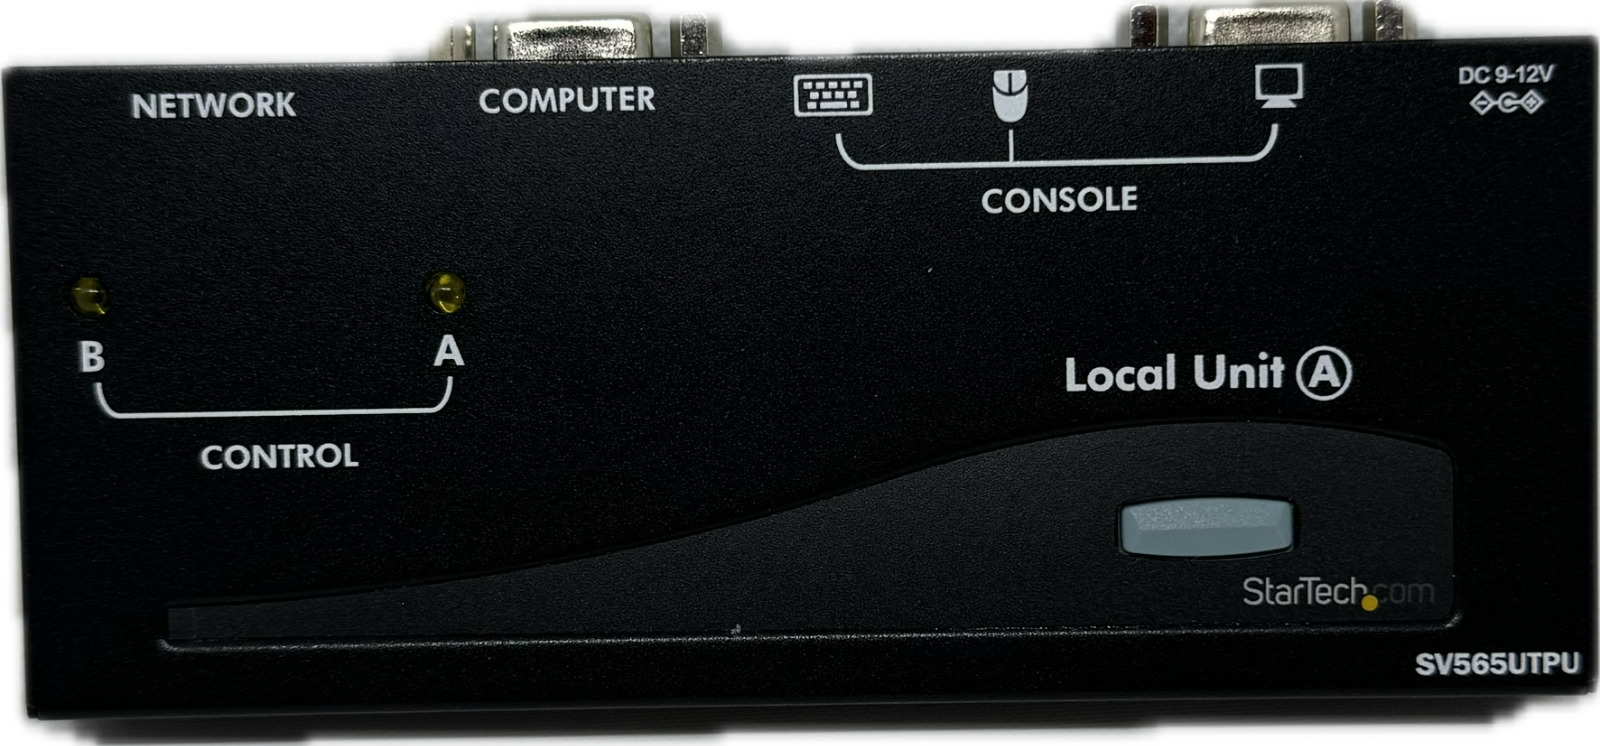 STARTECH SV565UTPU VGA USB KVM CONSOLE EXTENDER LOCAL UNIT A ONLY NEW